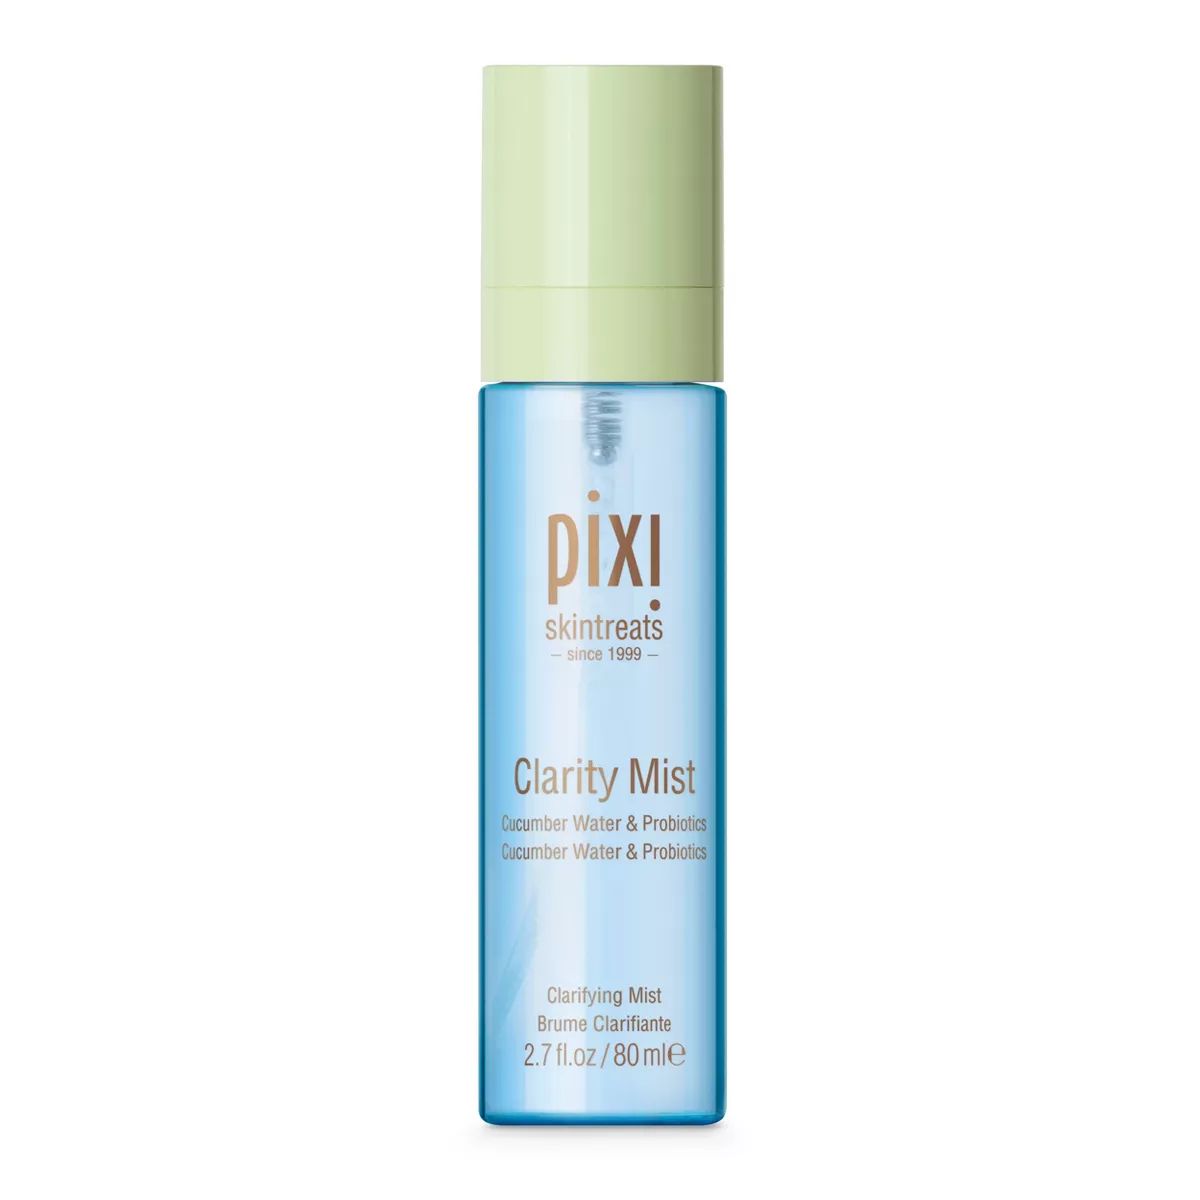 Pixi Clarity Mist with Cucumber Water & Probiotics - 2.7 fl oz | Target